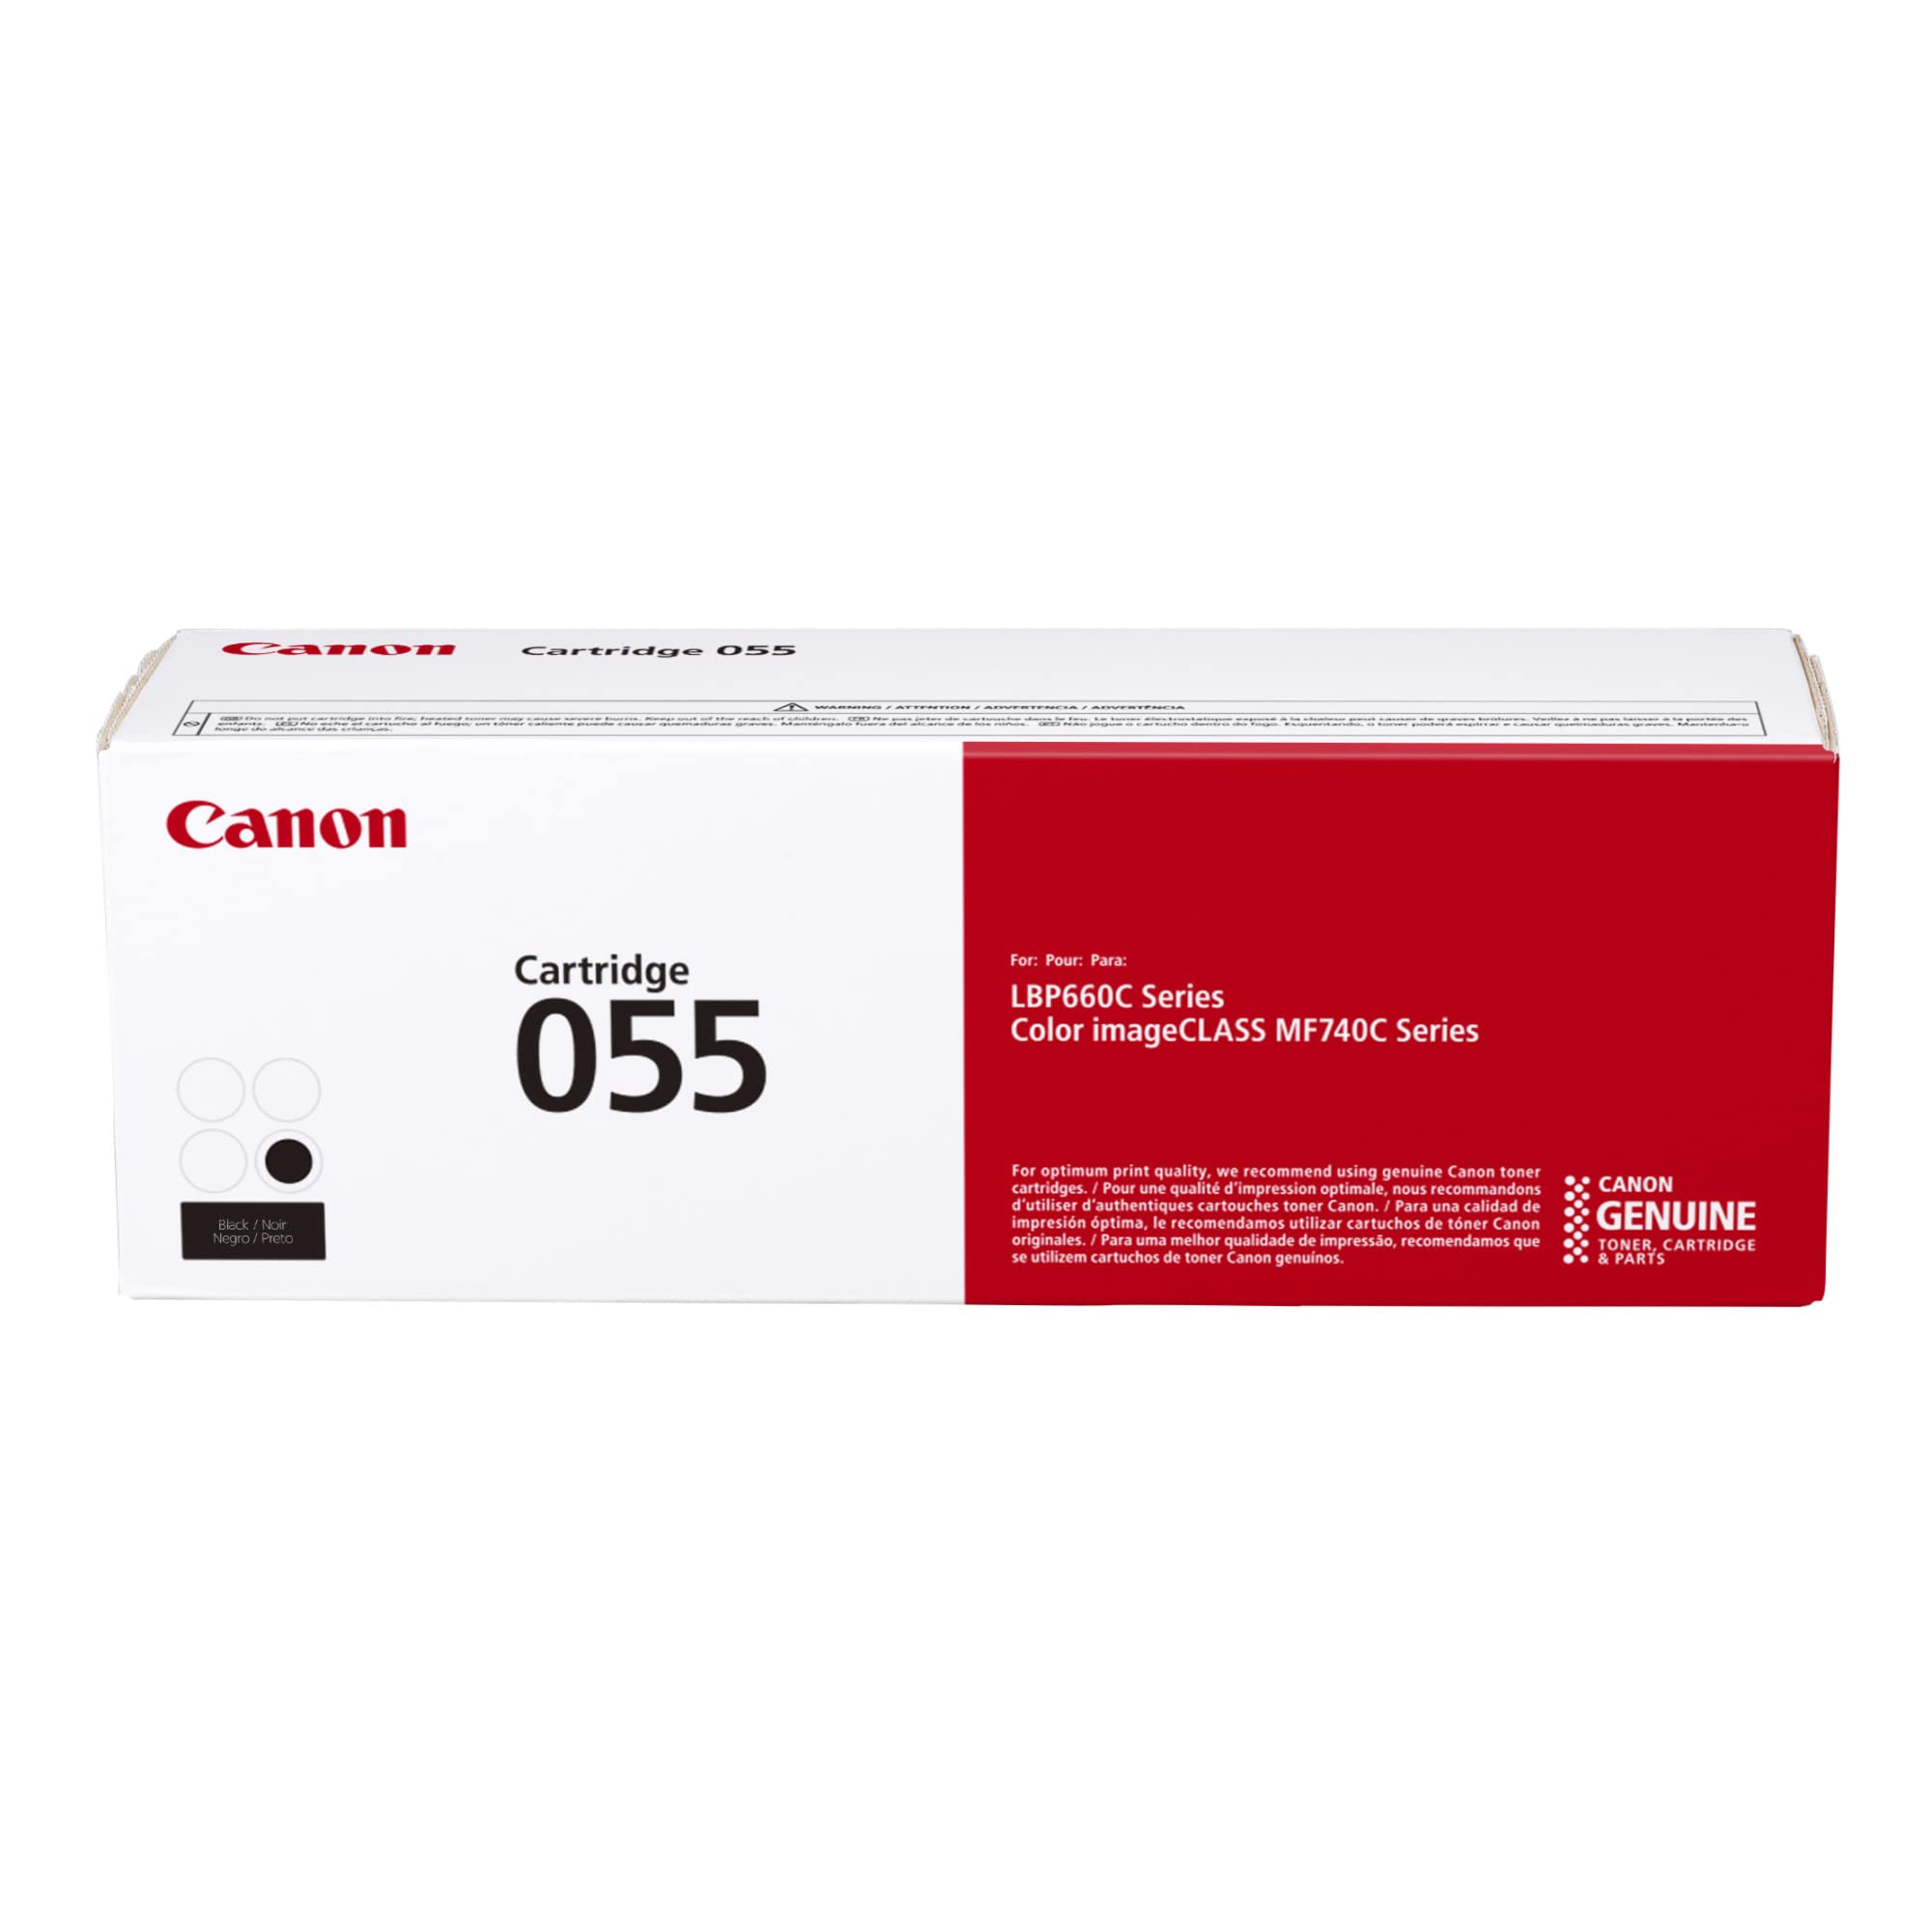 Canon Genuine Toner, Cartridge 055 Yellow (3013C001) 1 Pack Color imageCLASS MF741Cdw, MF743Cdw, MF745Cdw, MF746Cdw,LBP664Cdw Laser Printers, Standard